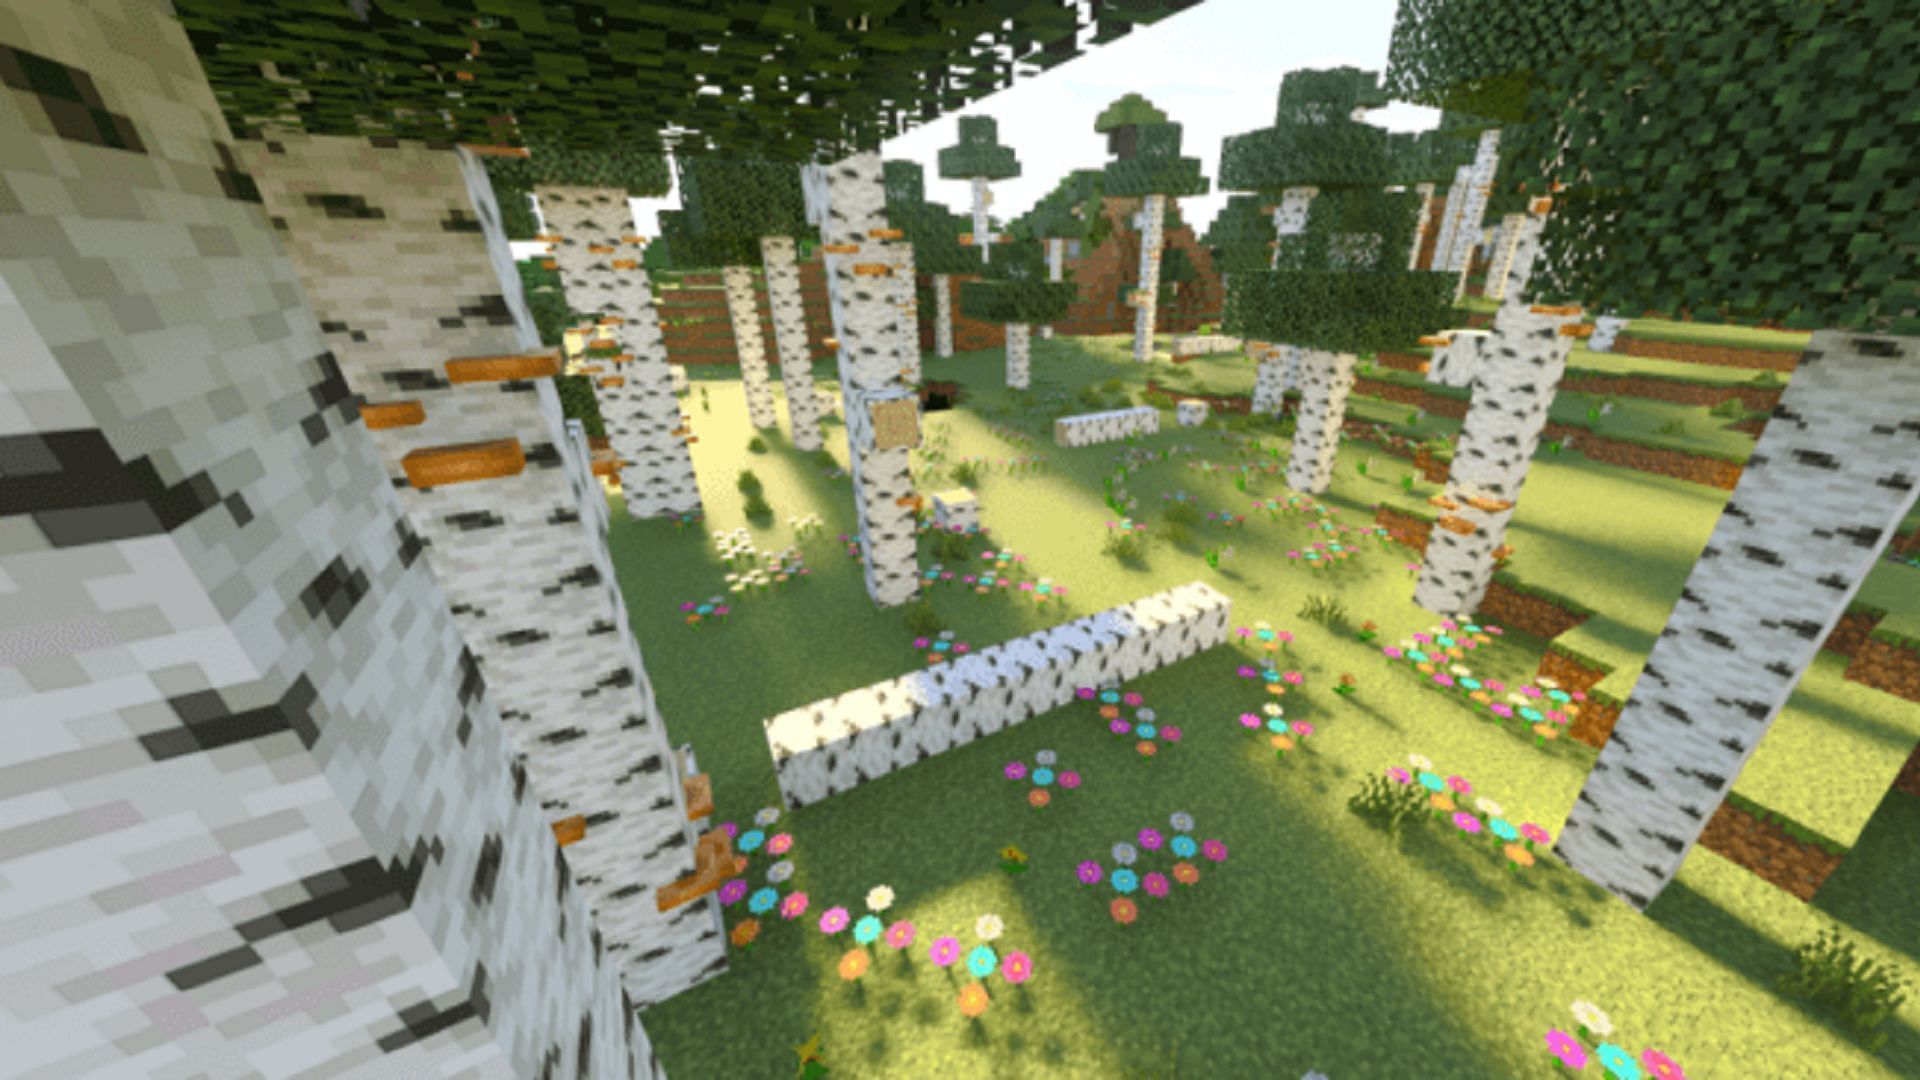 A birch forest biome concept for Minecraft 1.19 (Image via Mc-Addons.com)